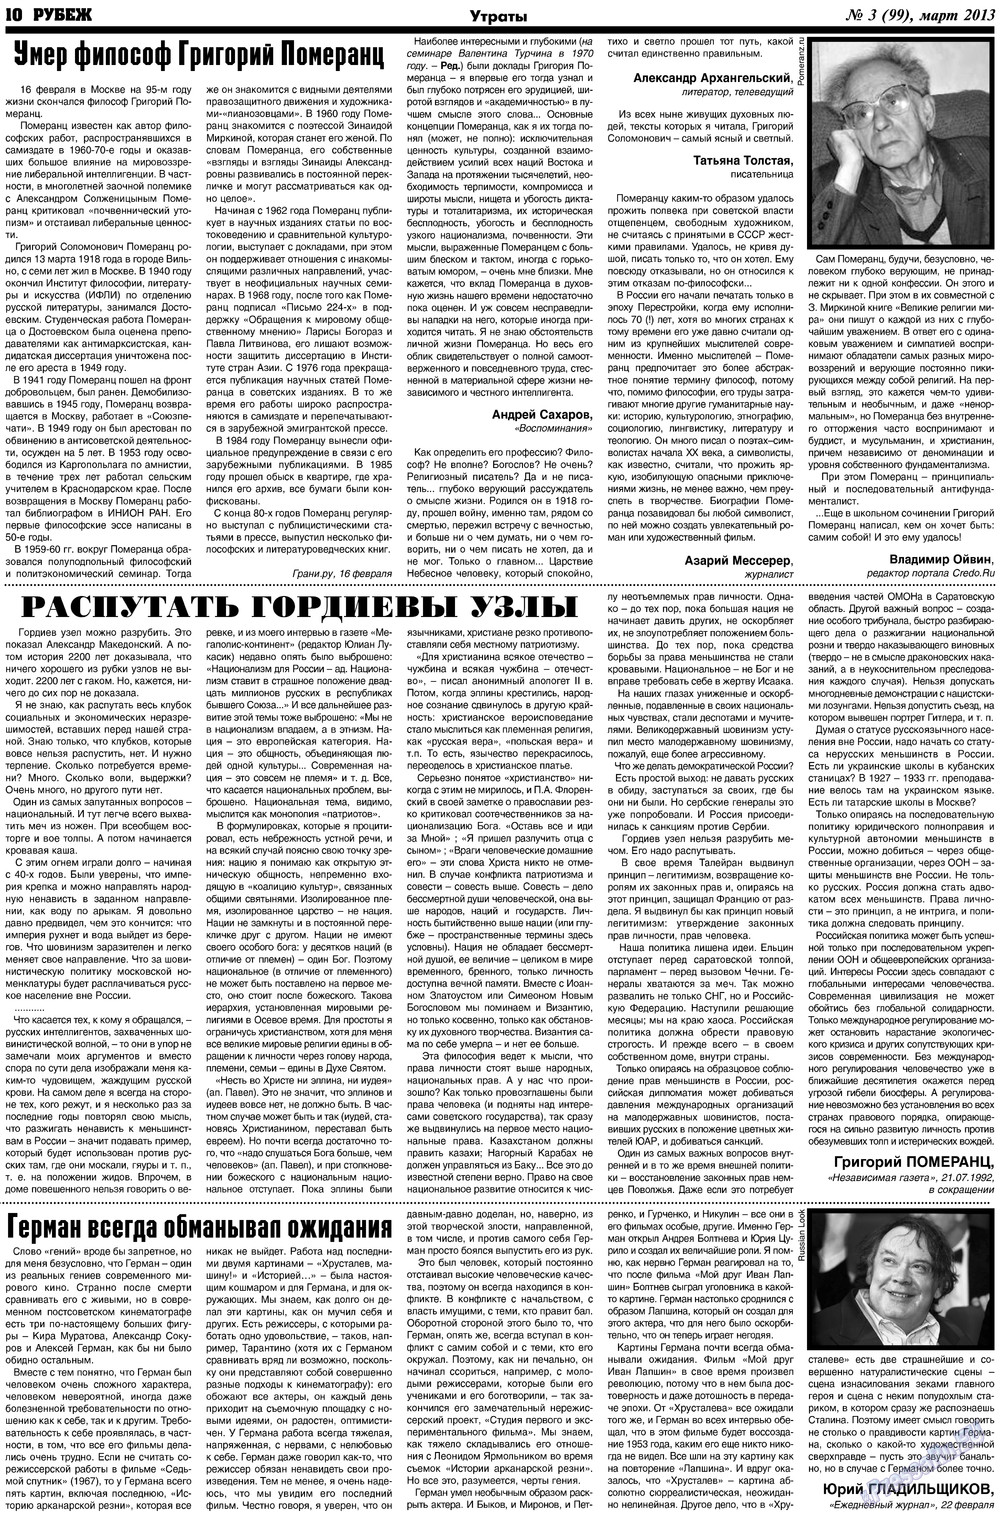 Рубеж, газета. 2013 №3 стр.10